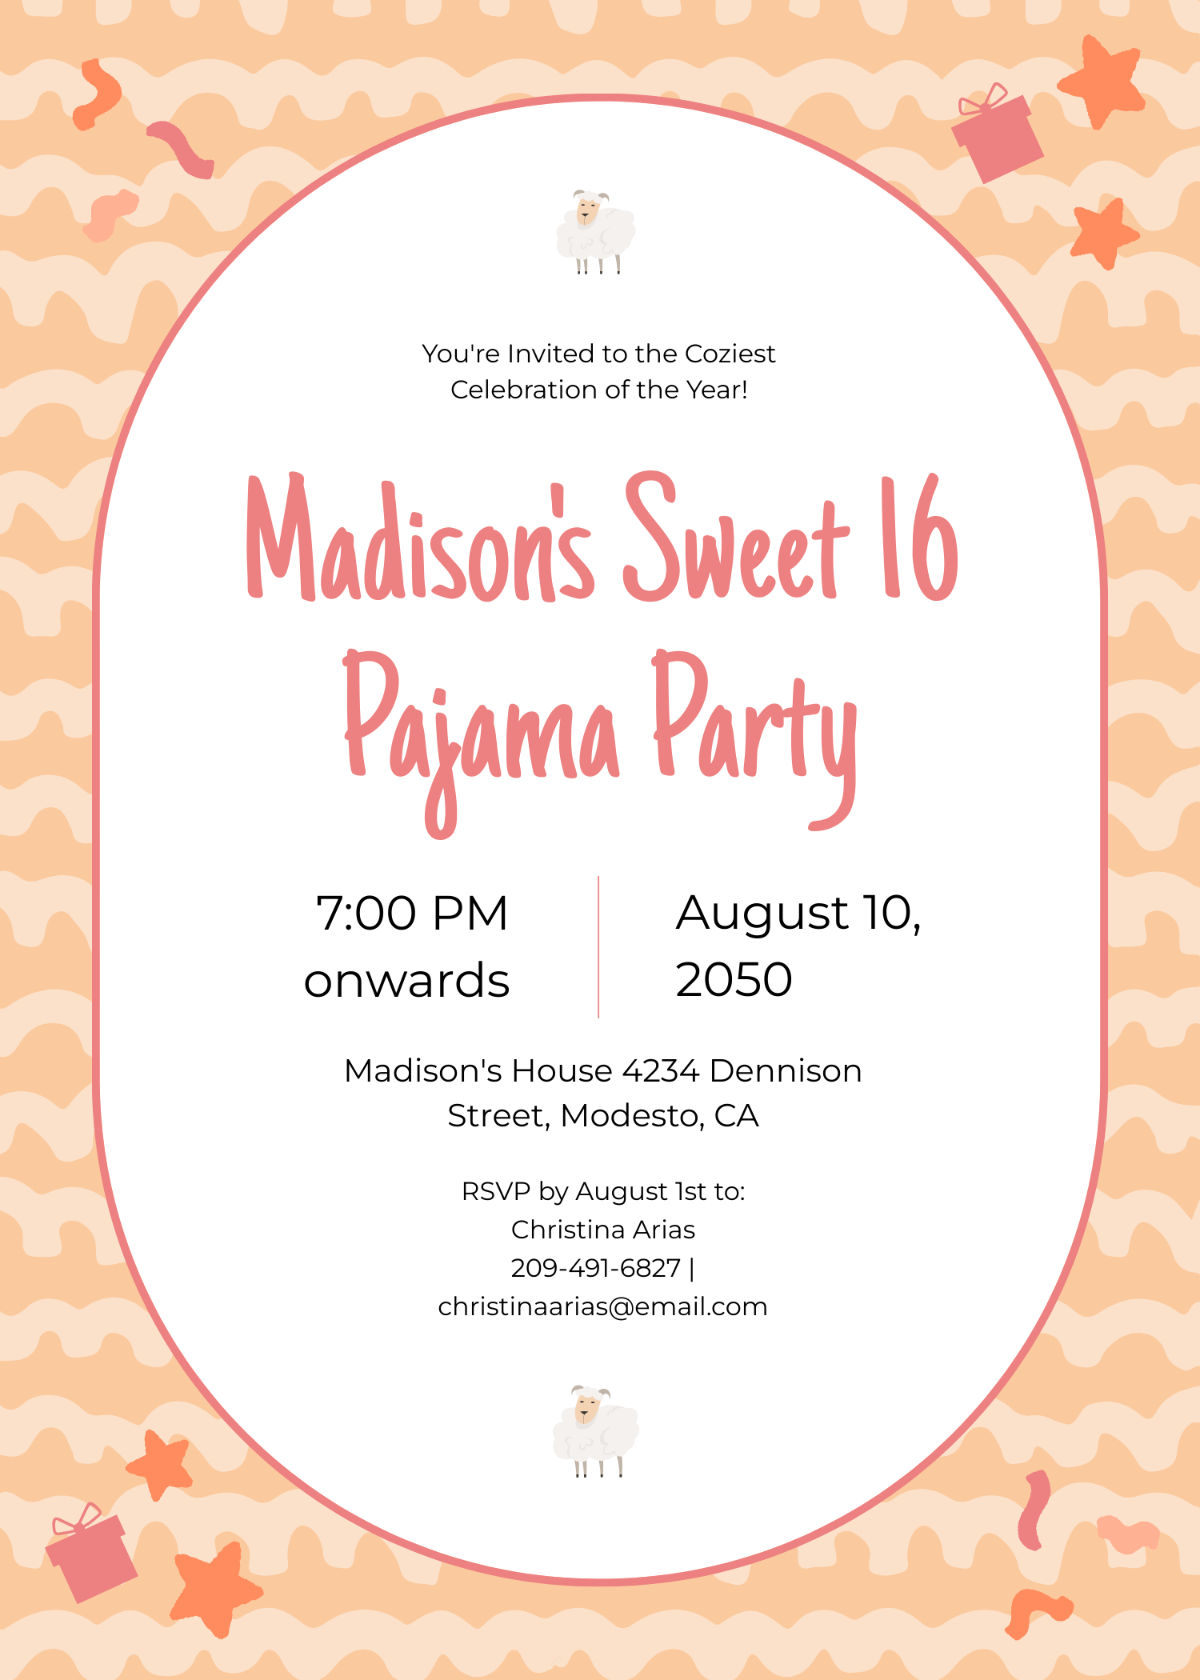 Sweet 16 Pajama Party Invitation